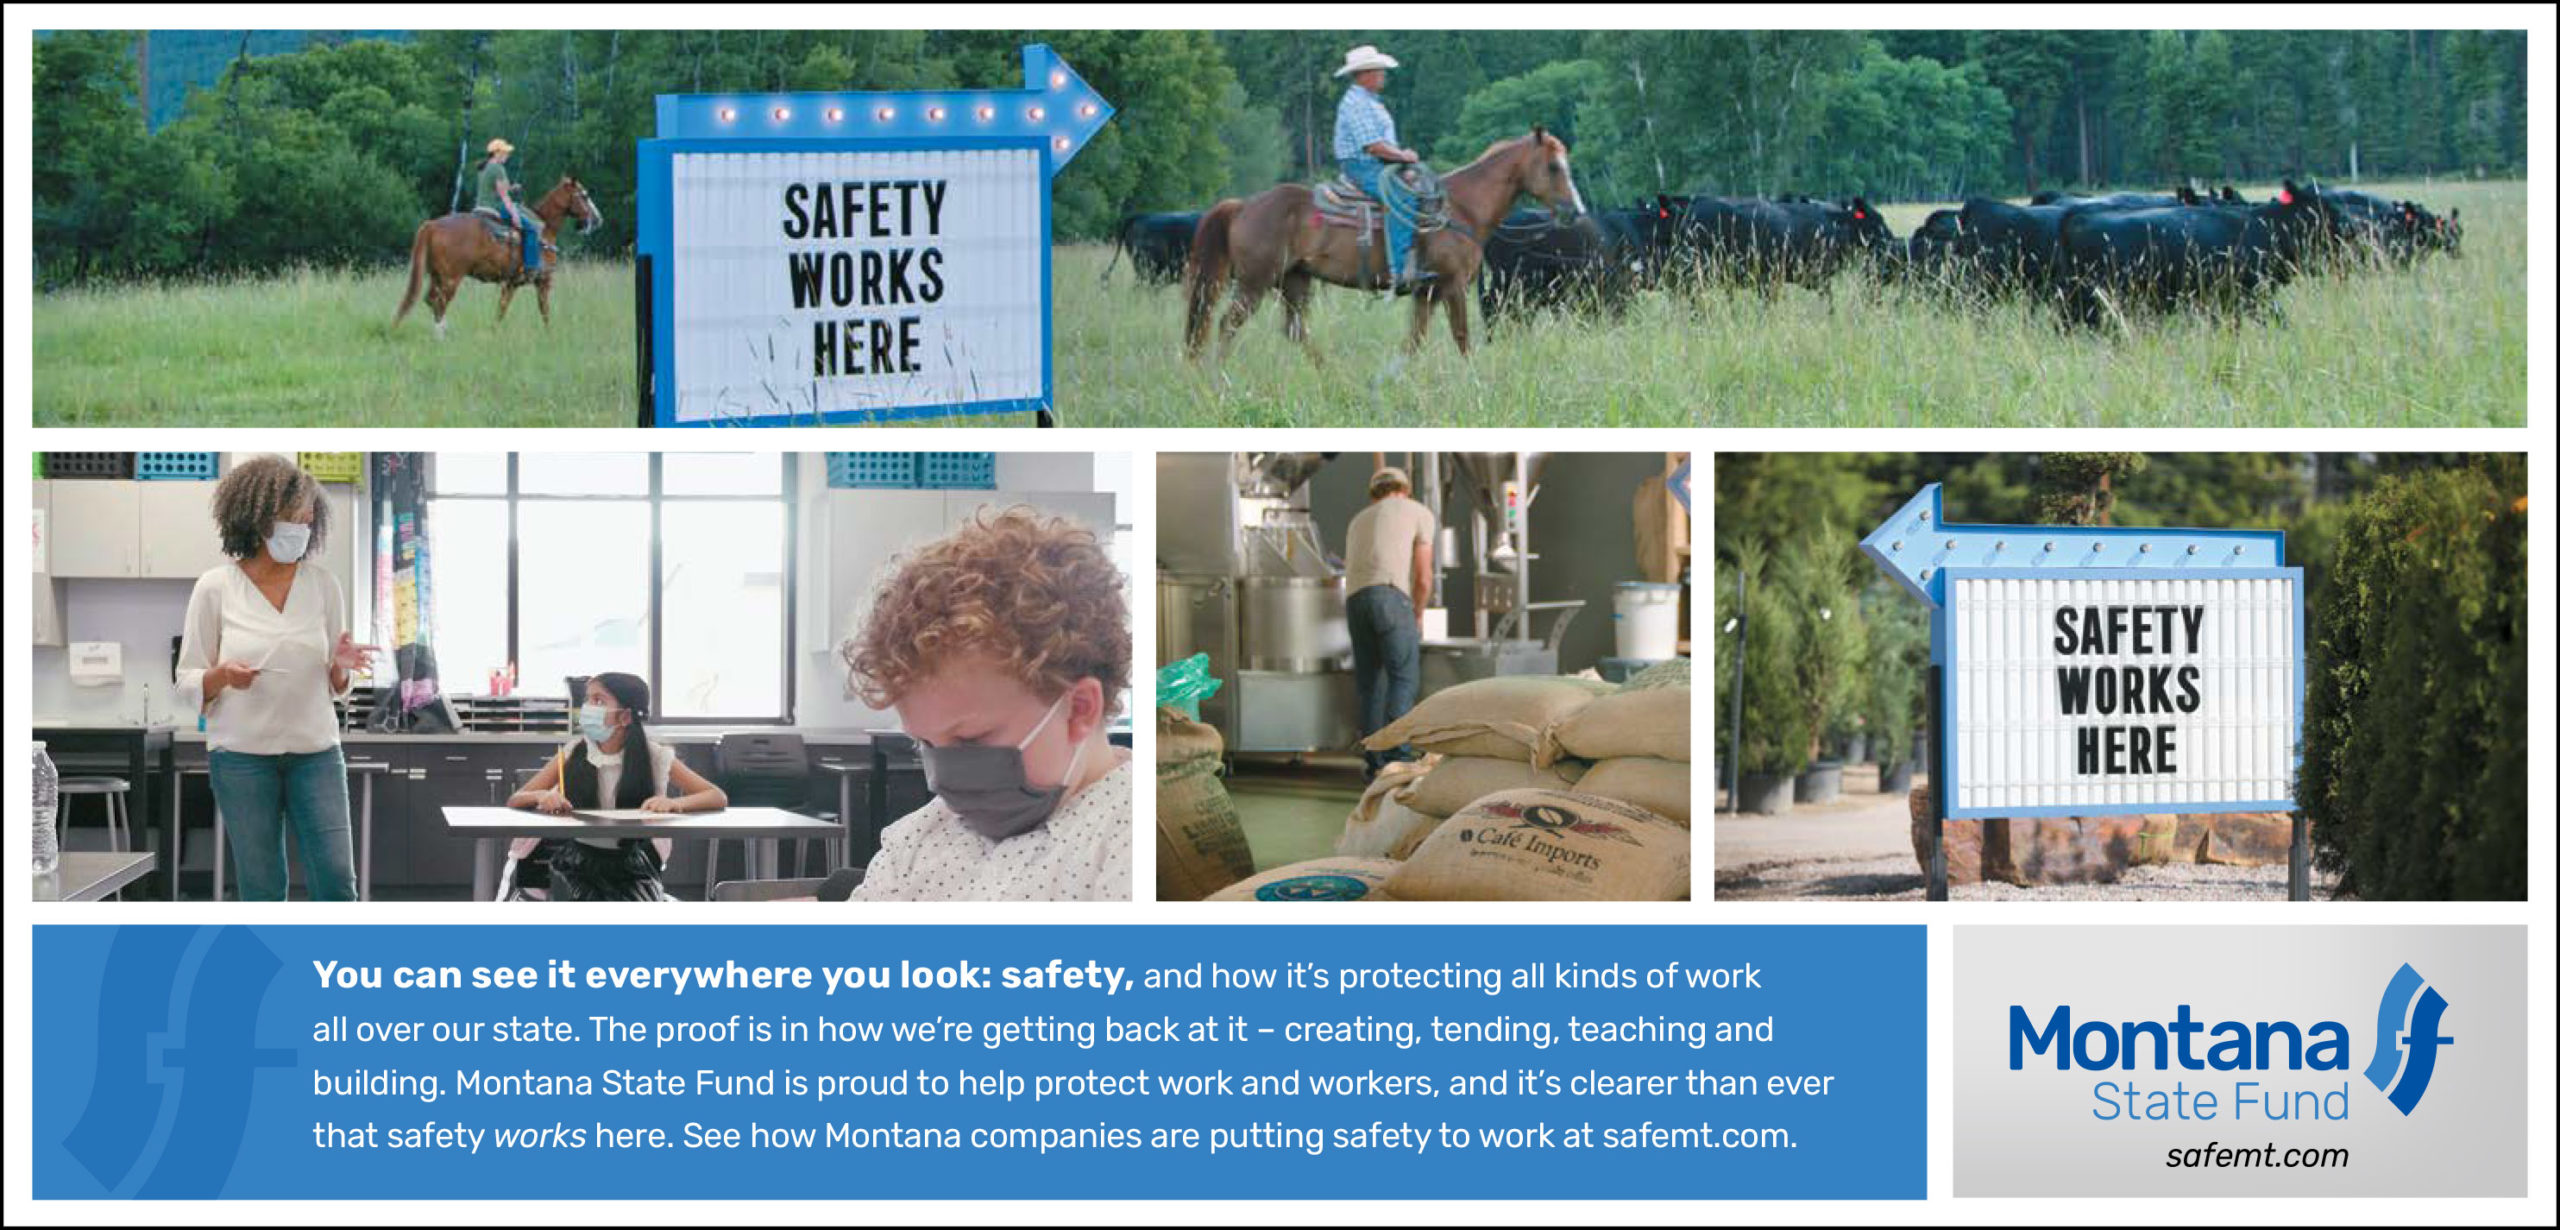 SafetyWorks Printad scaled